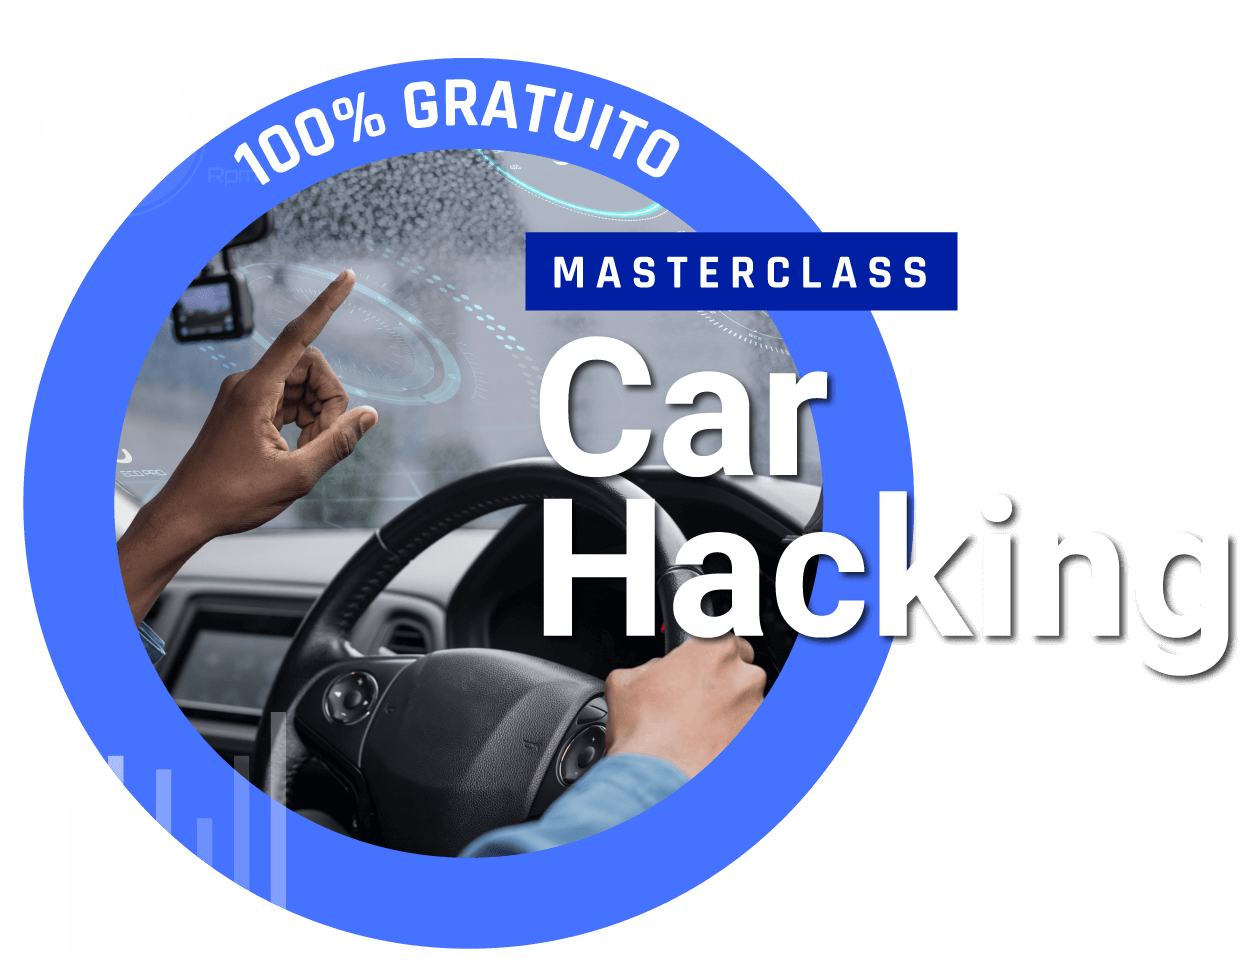 Masterclass Car Hacking